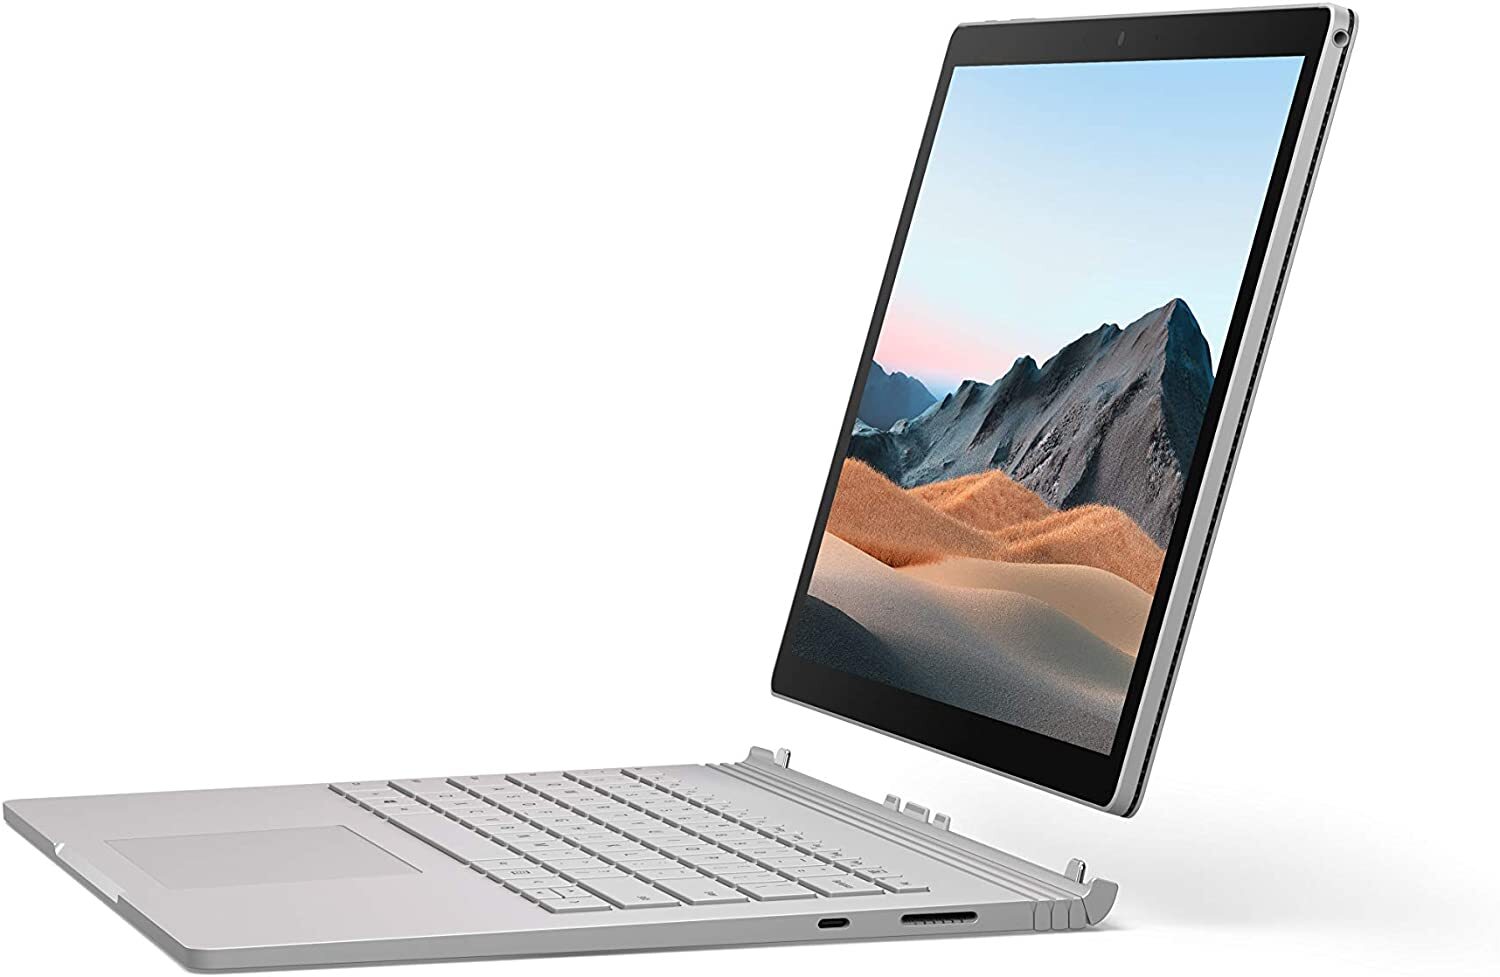 Laptop Microsoft Surface Book 3 - Intel Core I7-1065G7, 16GB RAM, SSD 256GB, Nvidia GeForce GTX 1650 4GB GDDR5, 13.5 inch